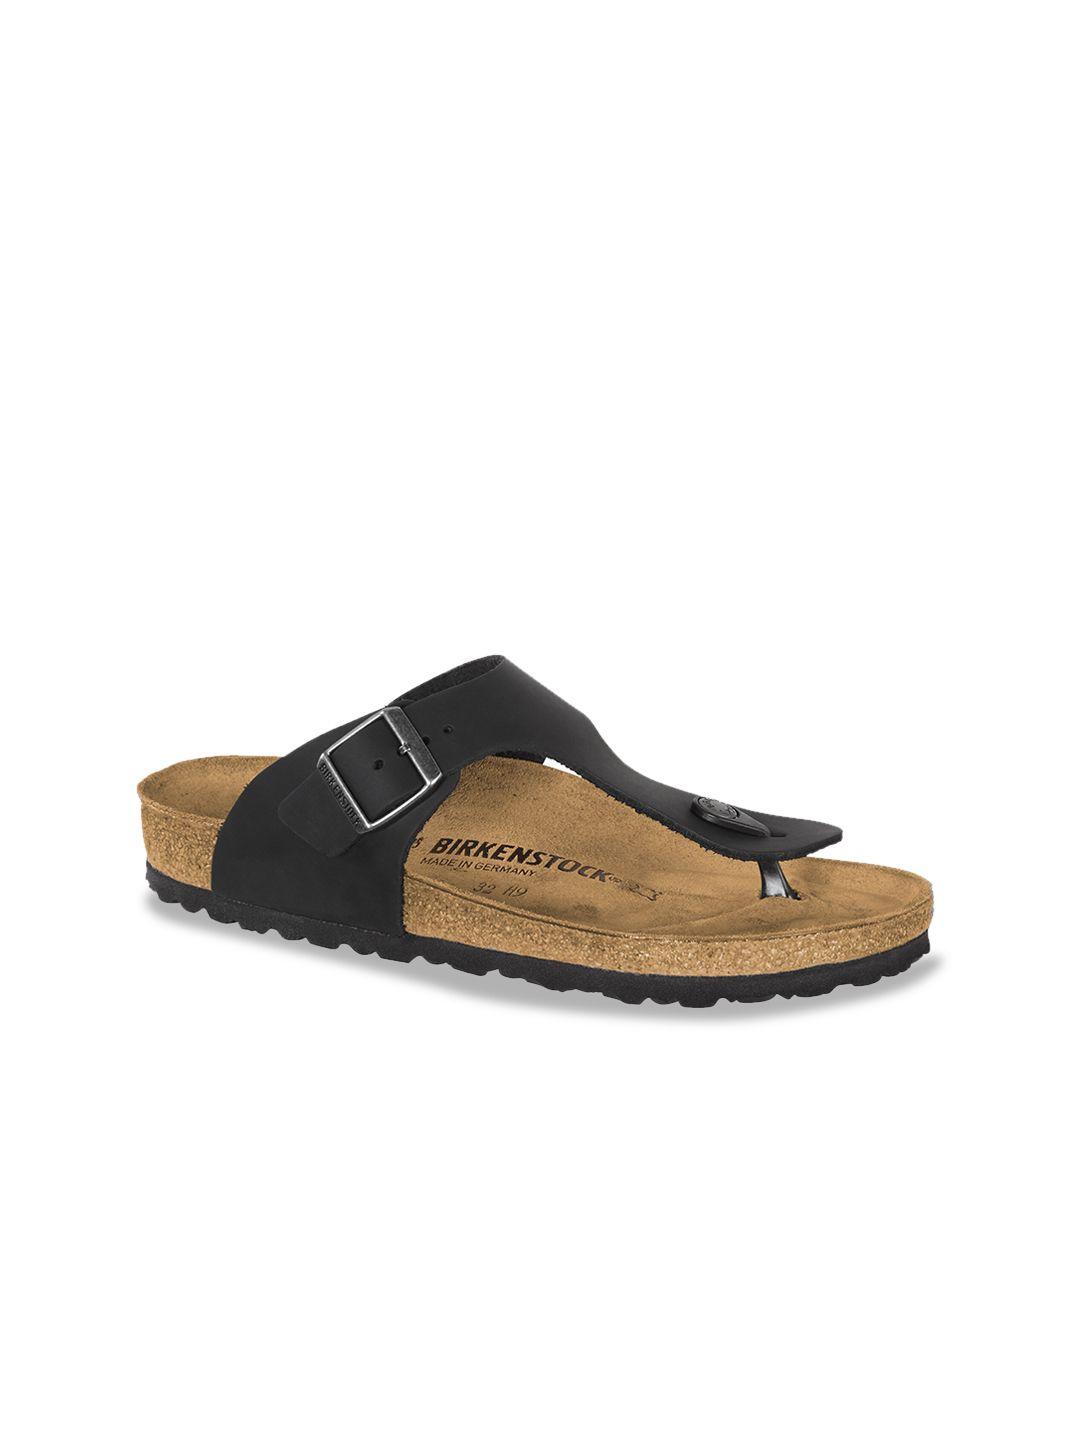 Birkenstock Unisex Black Regular Width Oiled Nubuck Leather Ramses Comfort Sandals